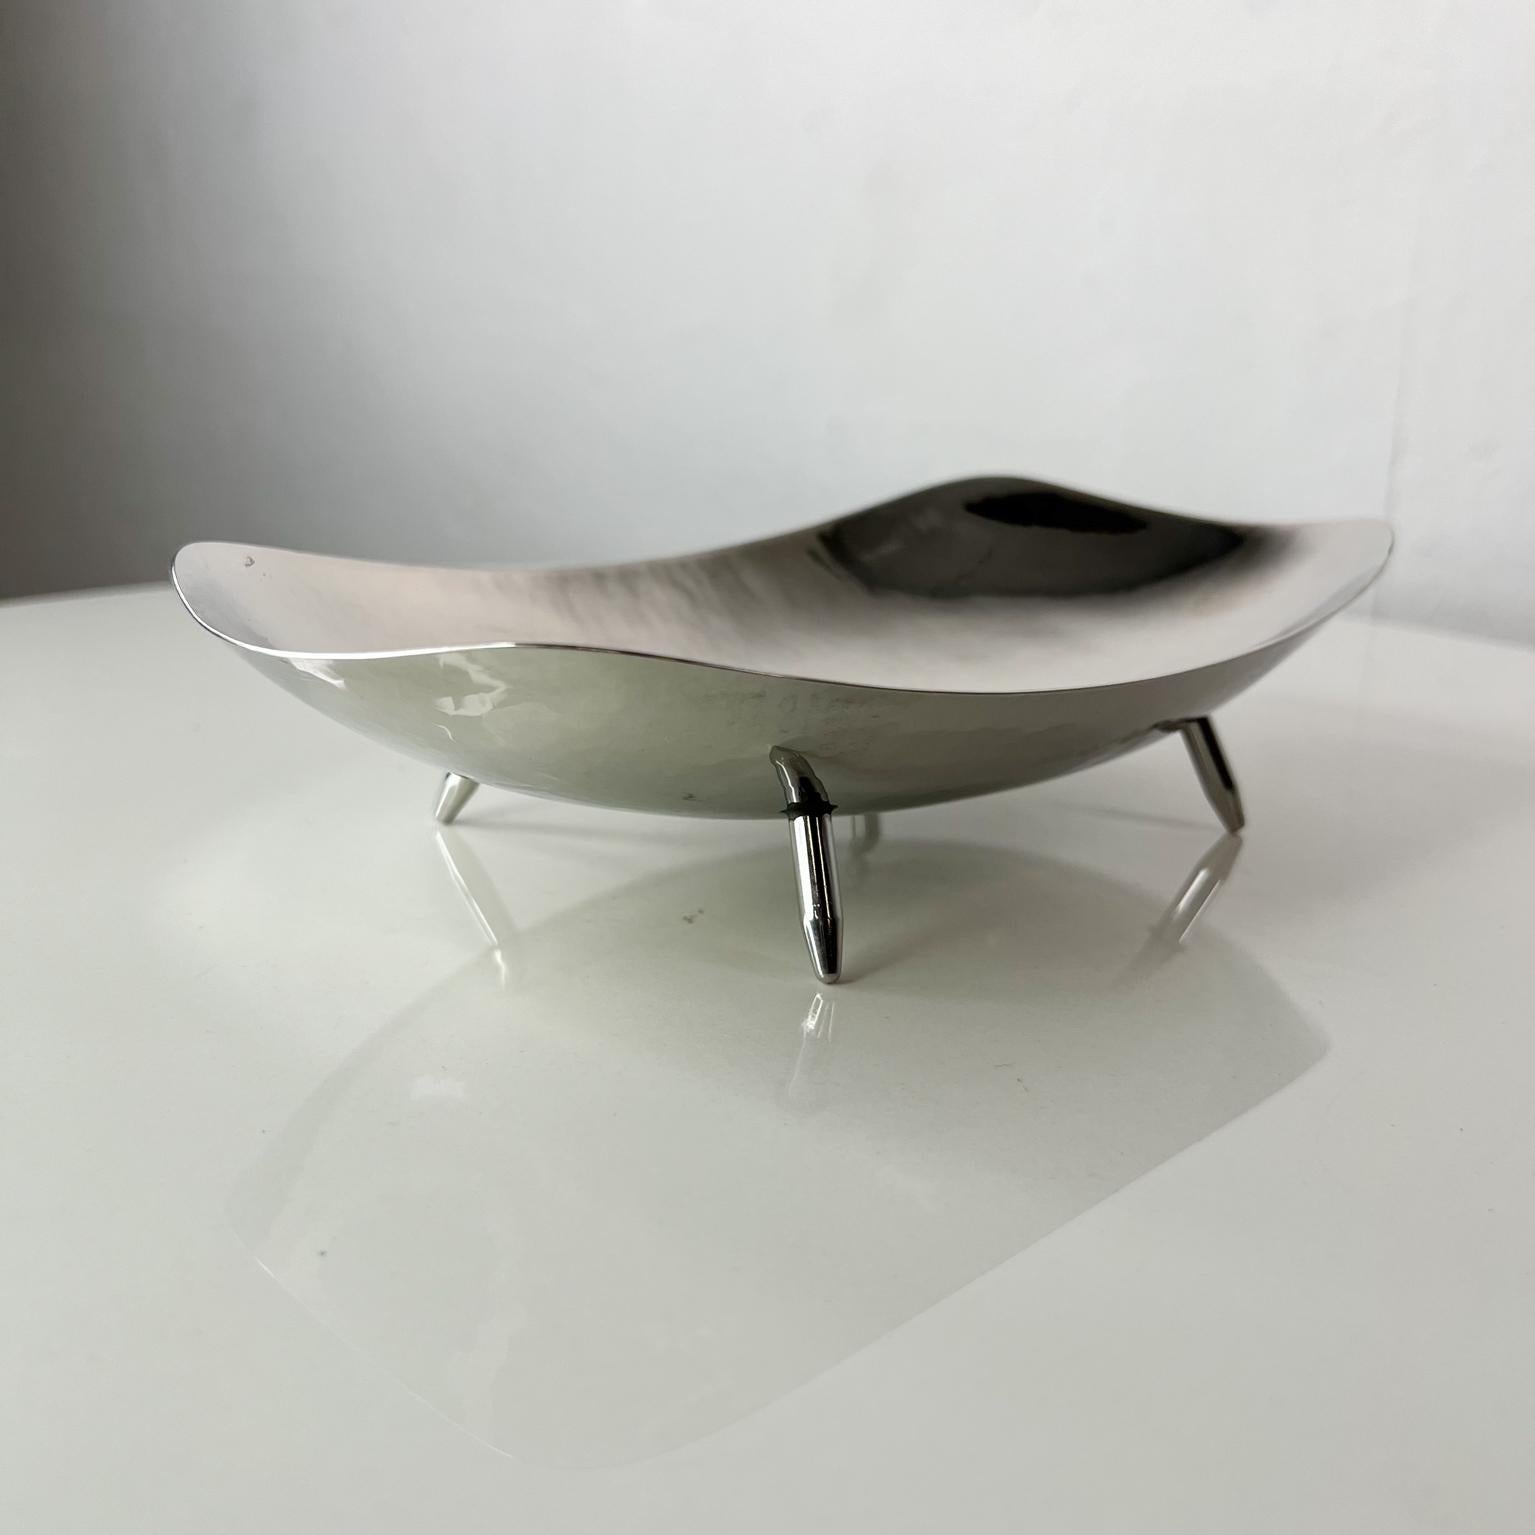 British 1940s Modernist Sculptural Chrome Dish Footed Keswick School Industrial Arts UK